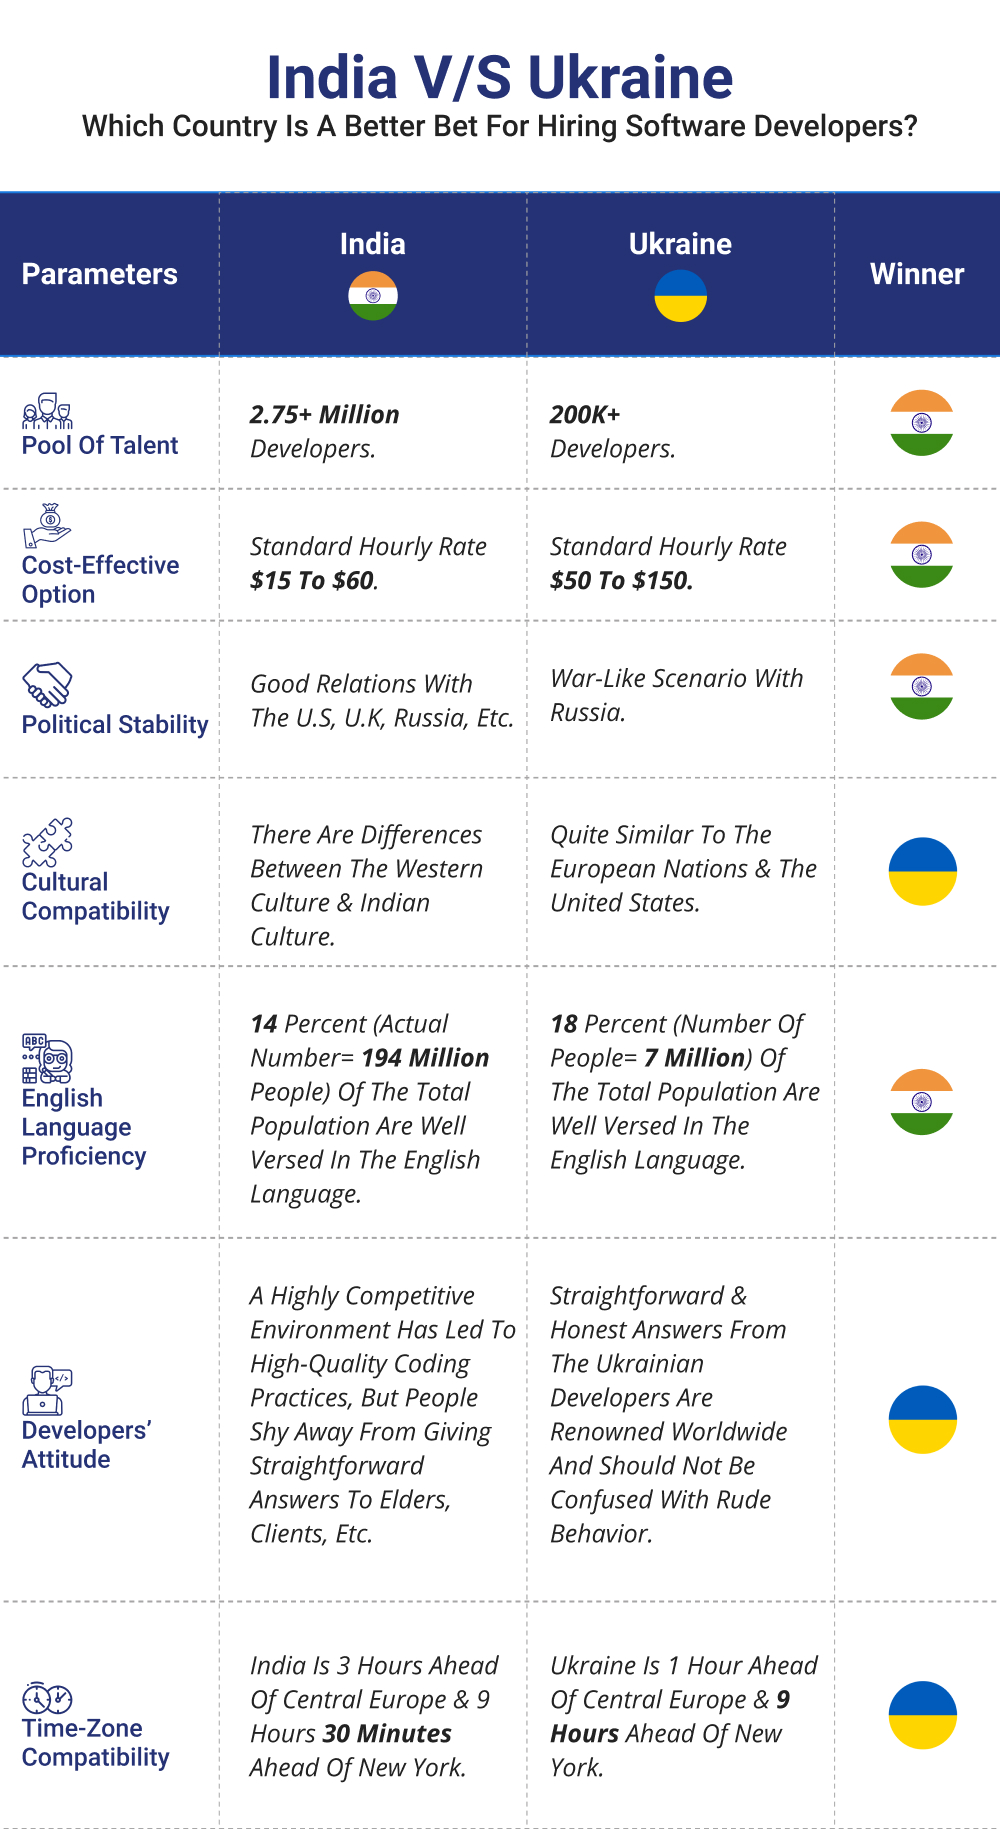 India vs Ukraine software developers, Ukraine vs India software developers, India or Ukraine for developers, Ukraine or India for hiring developers, hire software developers from India or Ukraine